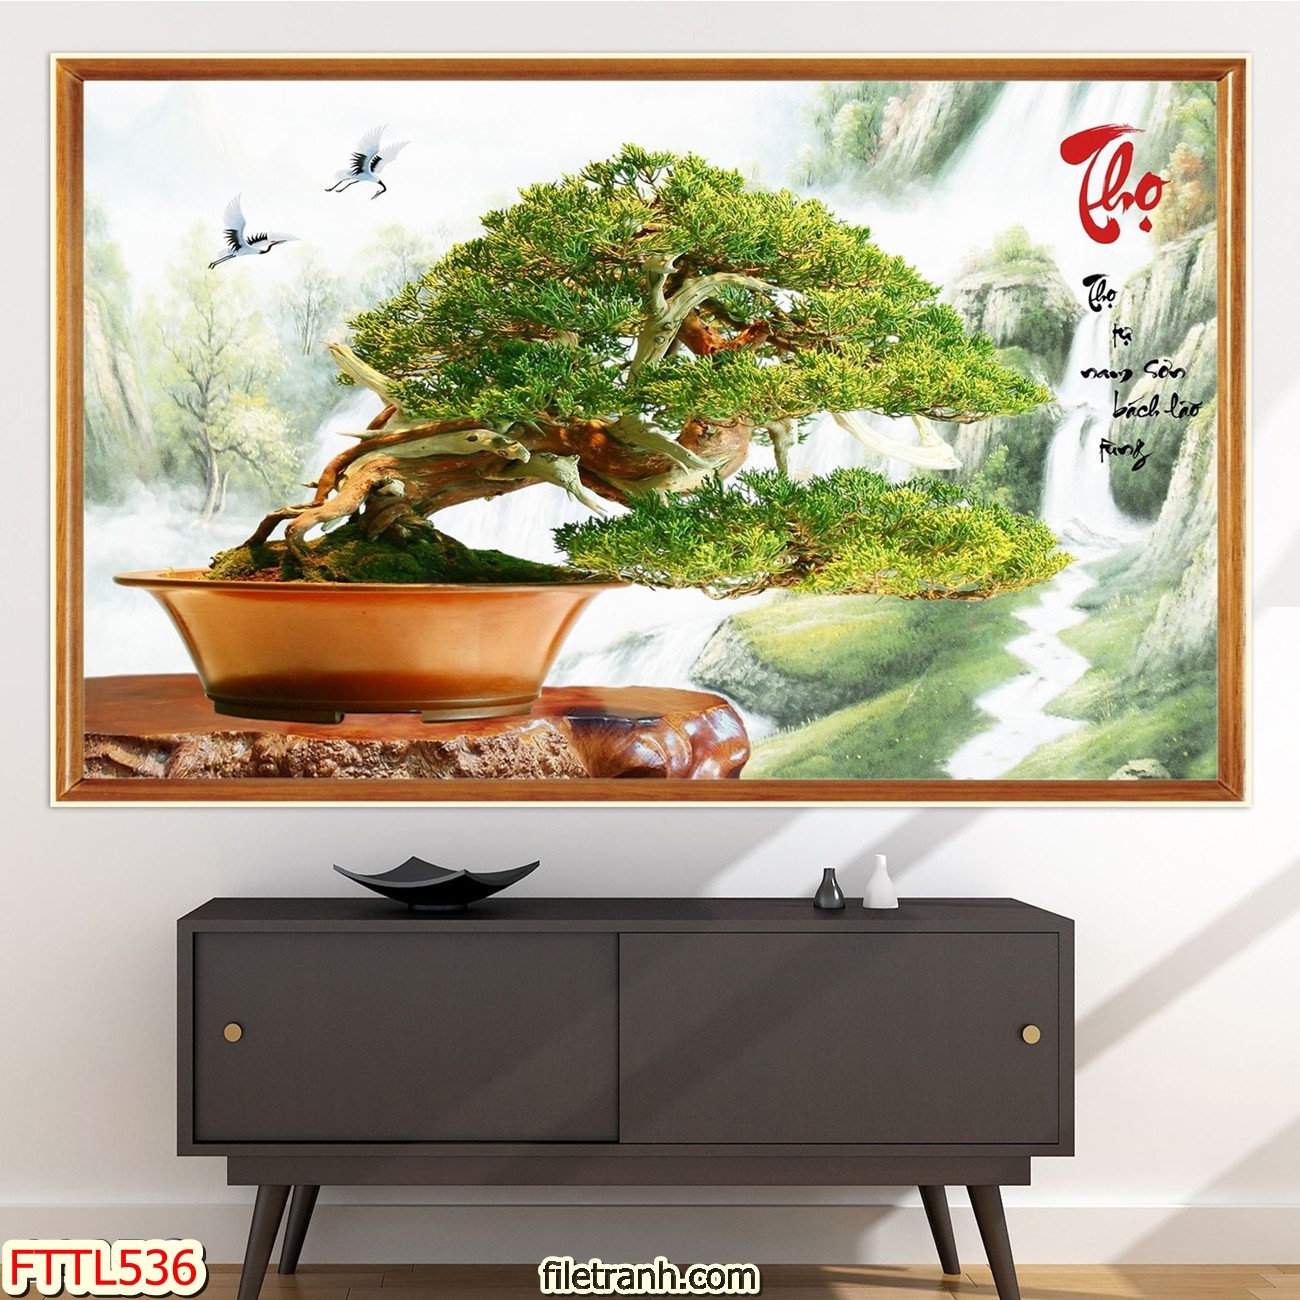 https://filetranh.com/file-tranh-chau-mai-bonsai/file-tranh-chau-mai-bonsai-fttl536.html